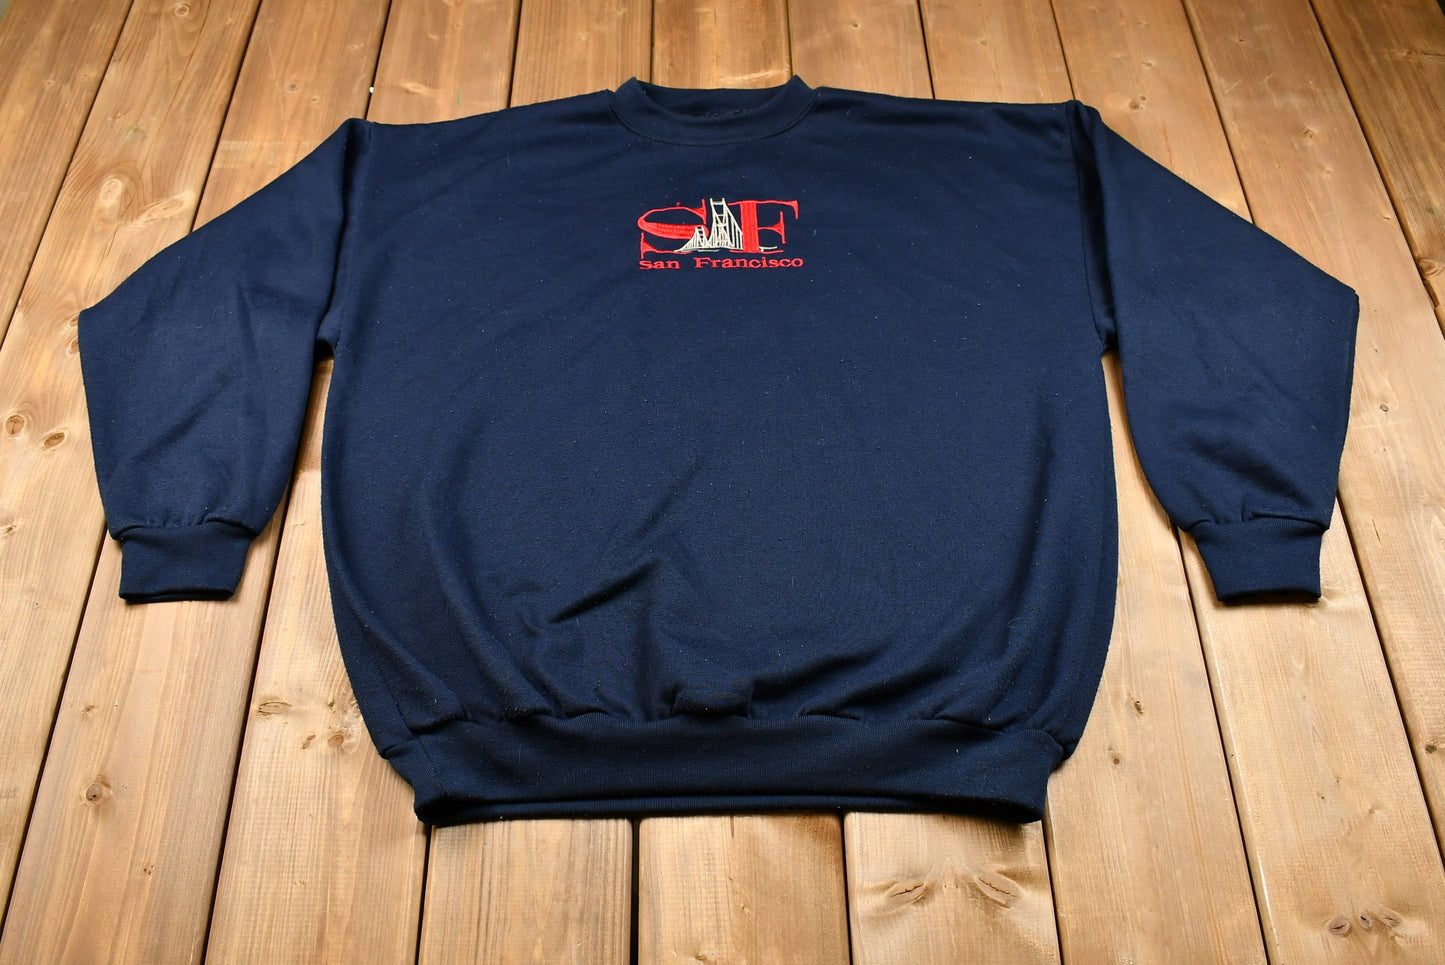 Vintage 1990s San Francisco Embroidered Crewneck Sweatshirt / Vintage Pullover /  Americana / Sportswear / Athleisure